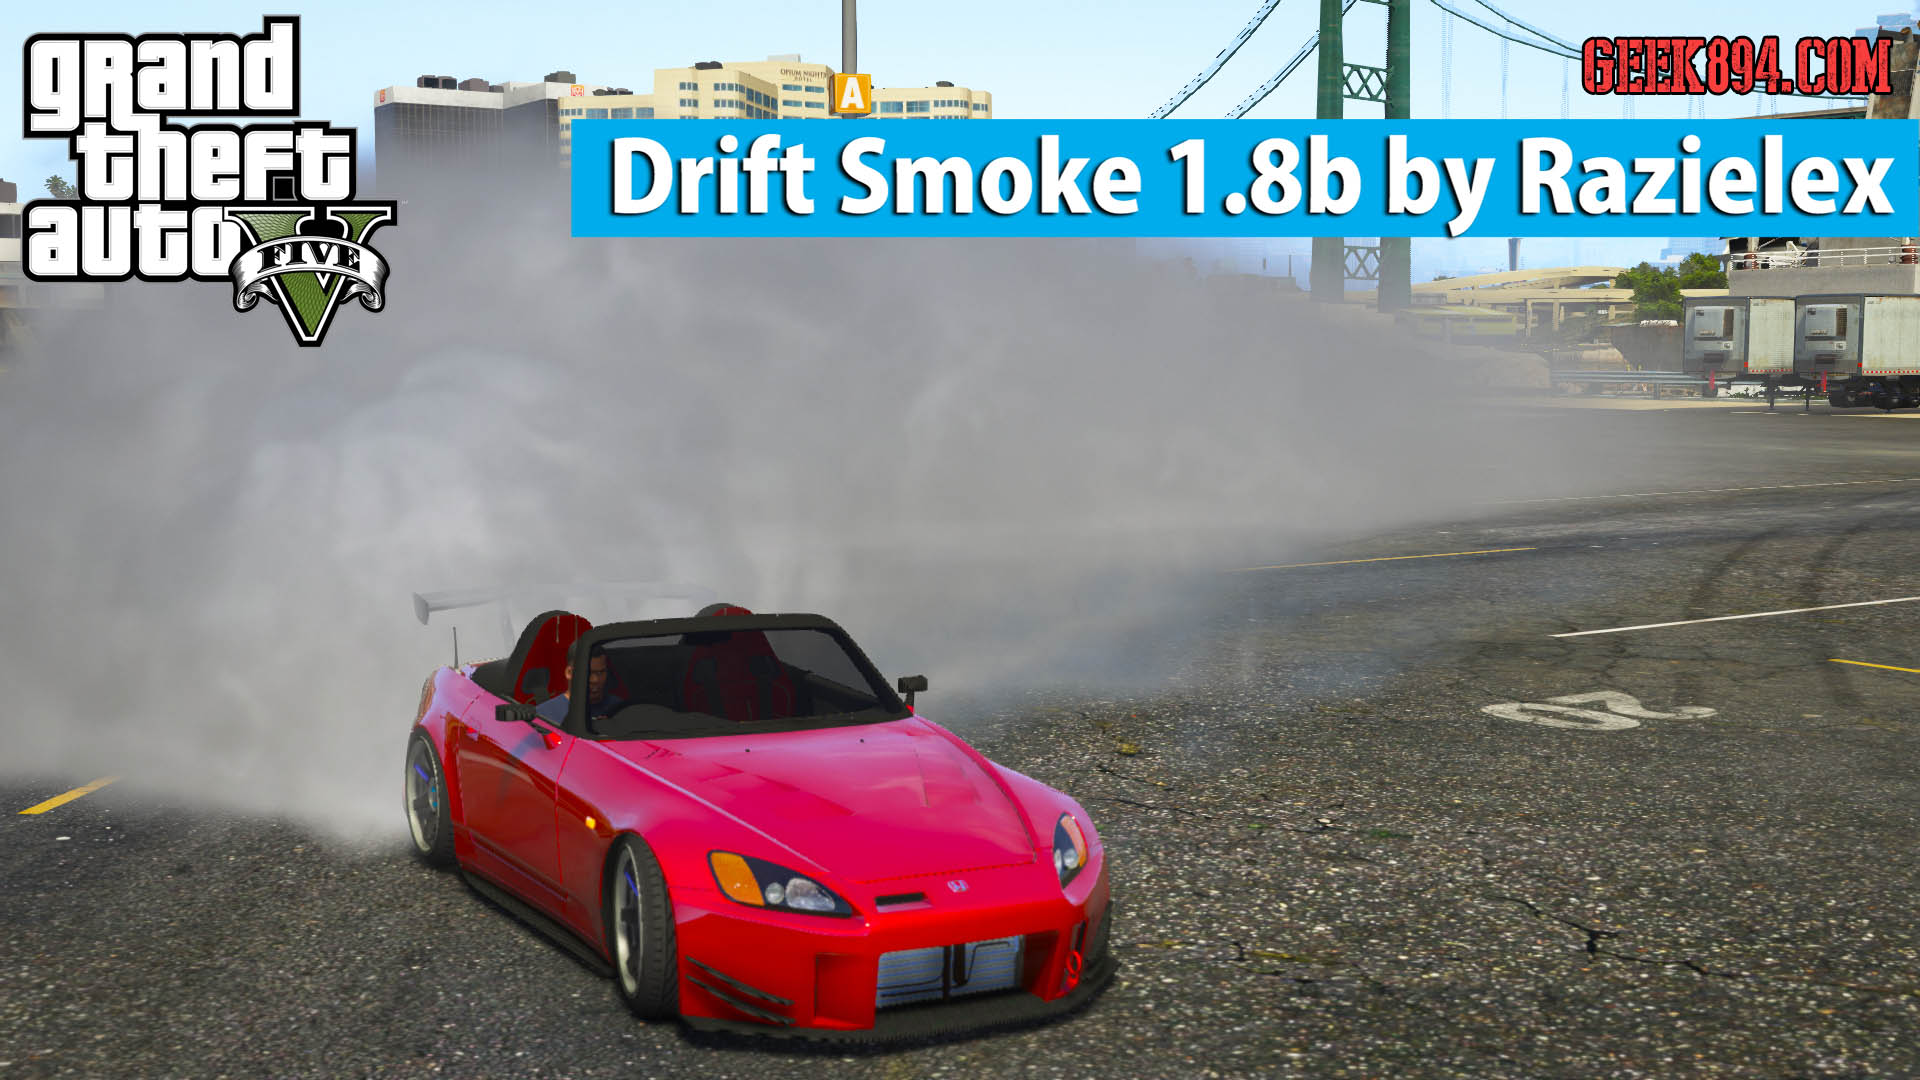 Gta5のタイヤスモークを圧倒的に増大させるmod Drift Smoke1 8b が登場 これは今後に期待したい Geek4 Com